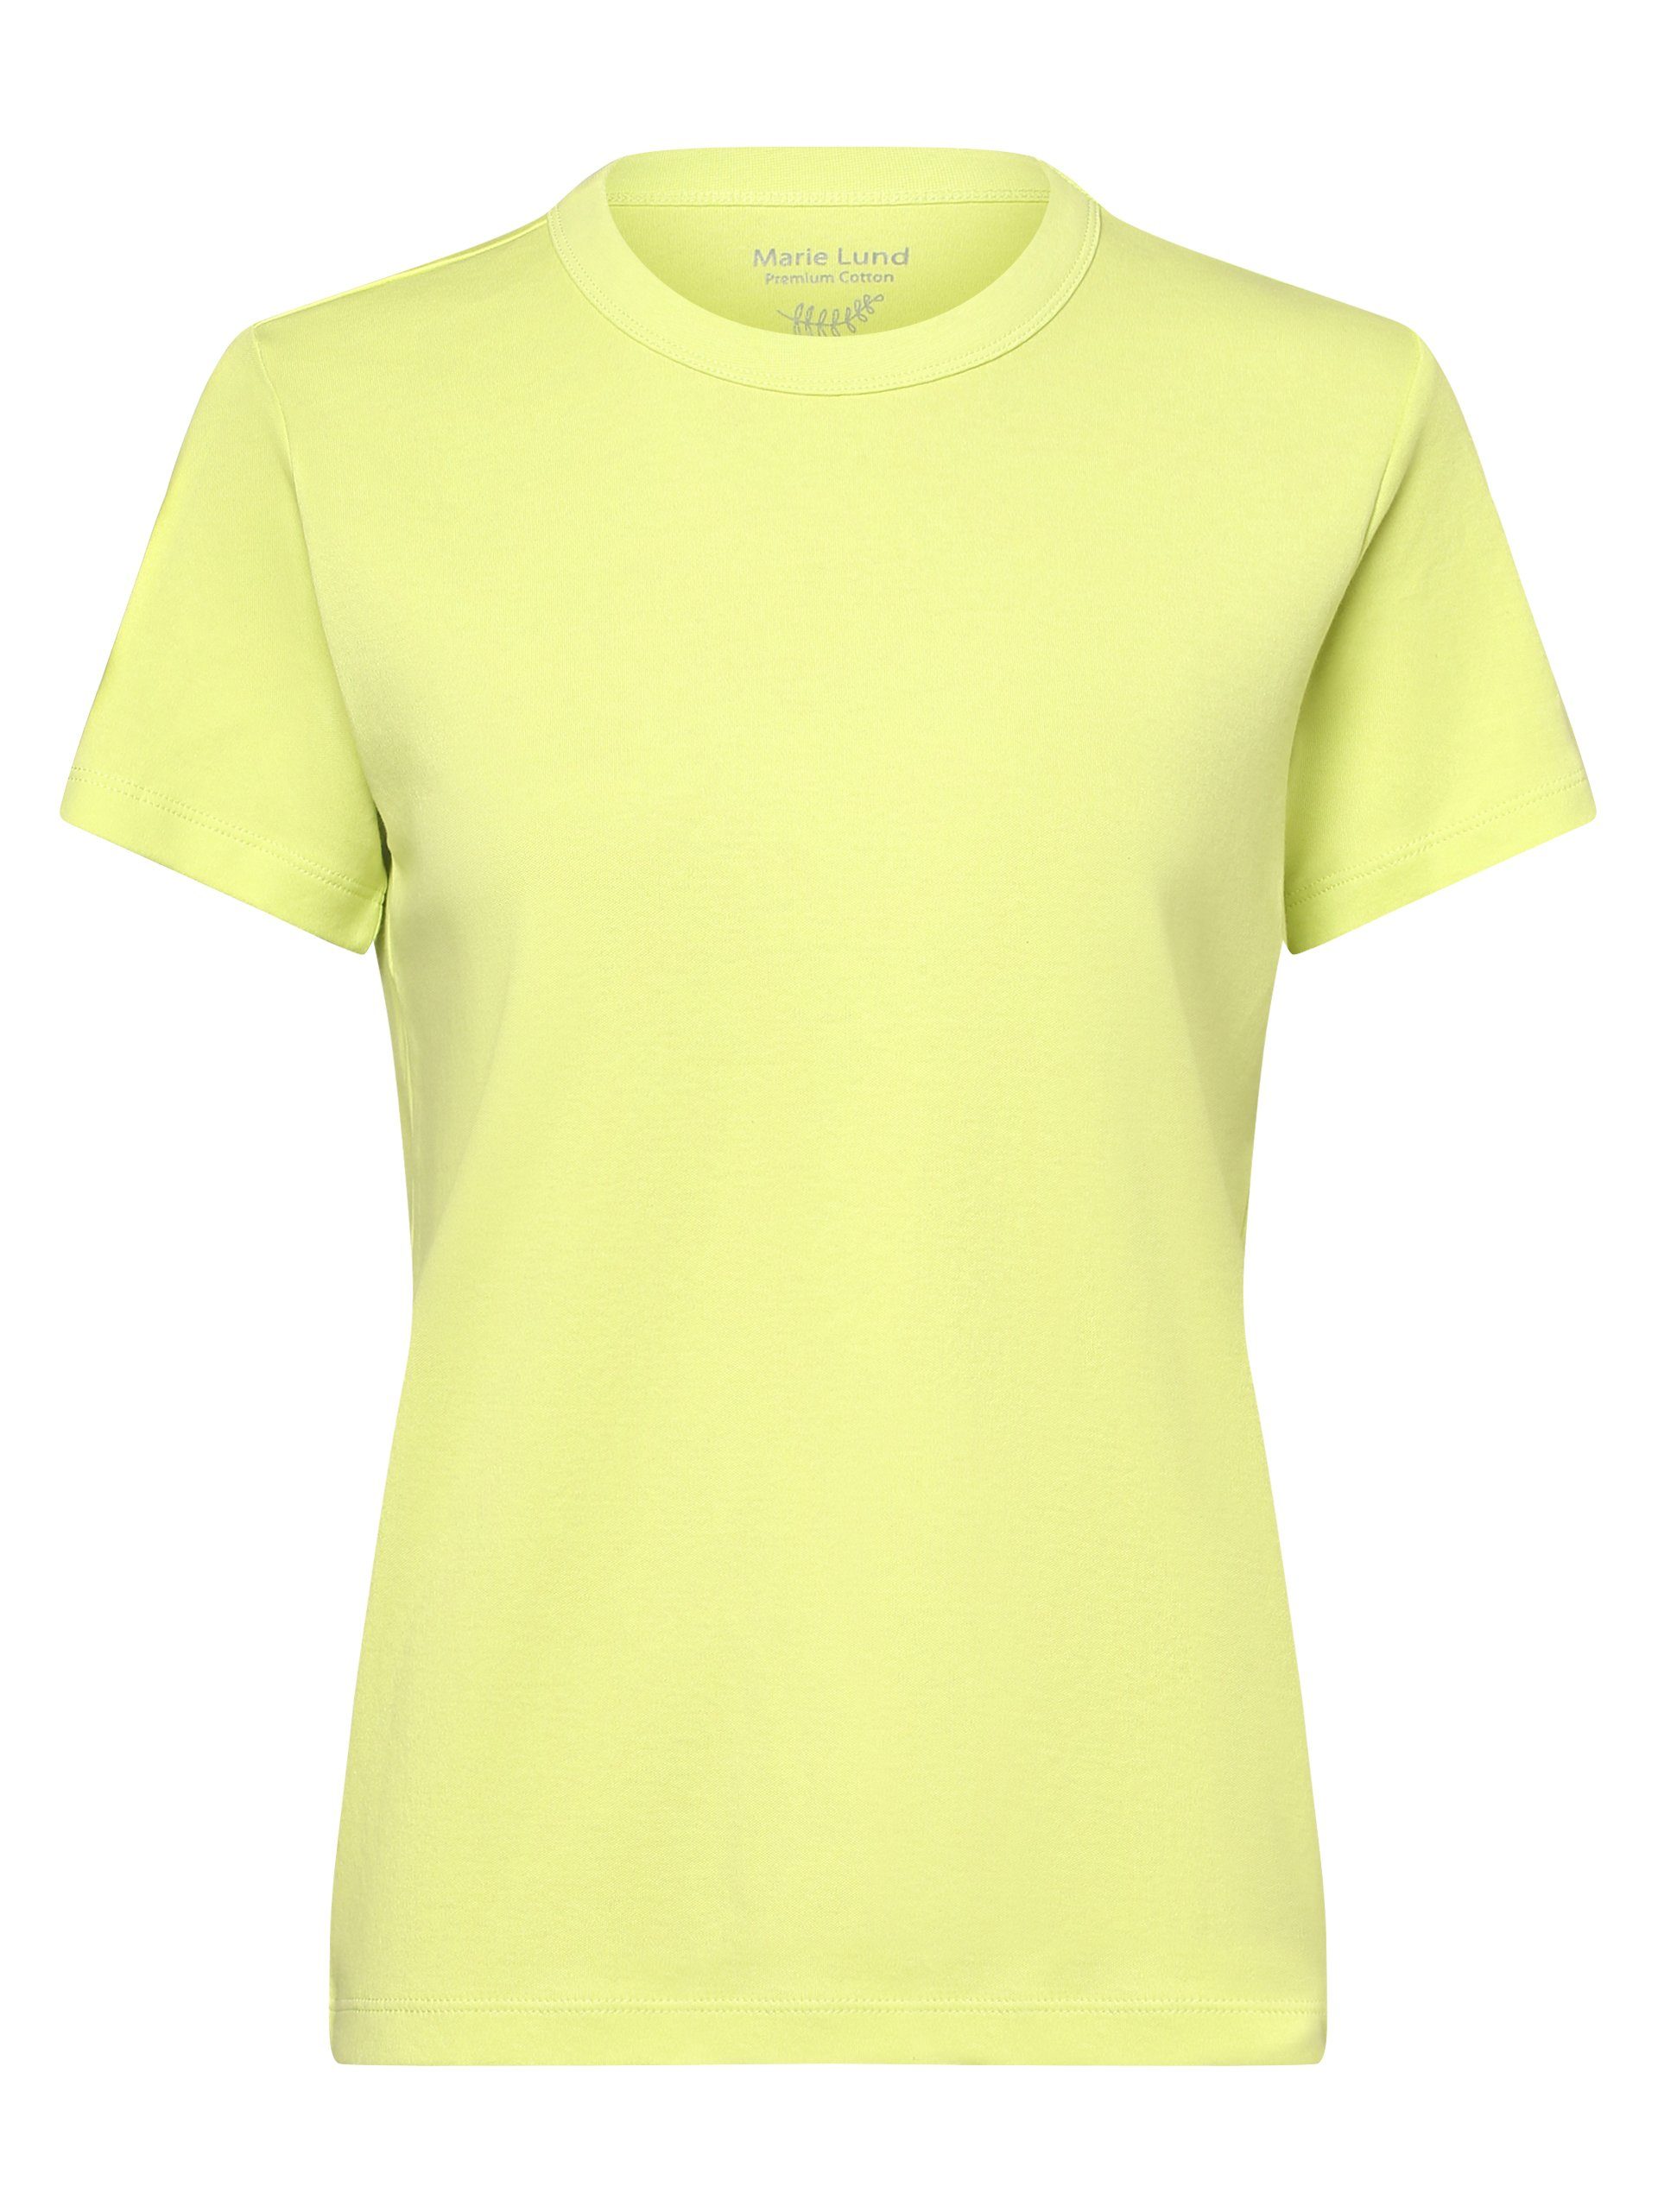 Marie Lund T-Shirt limone